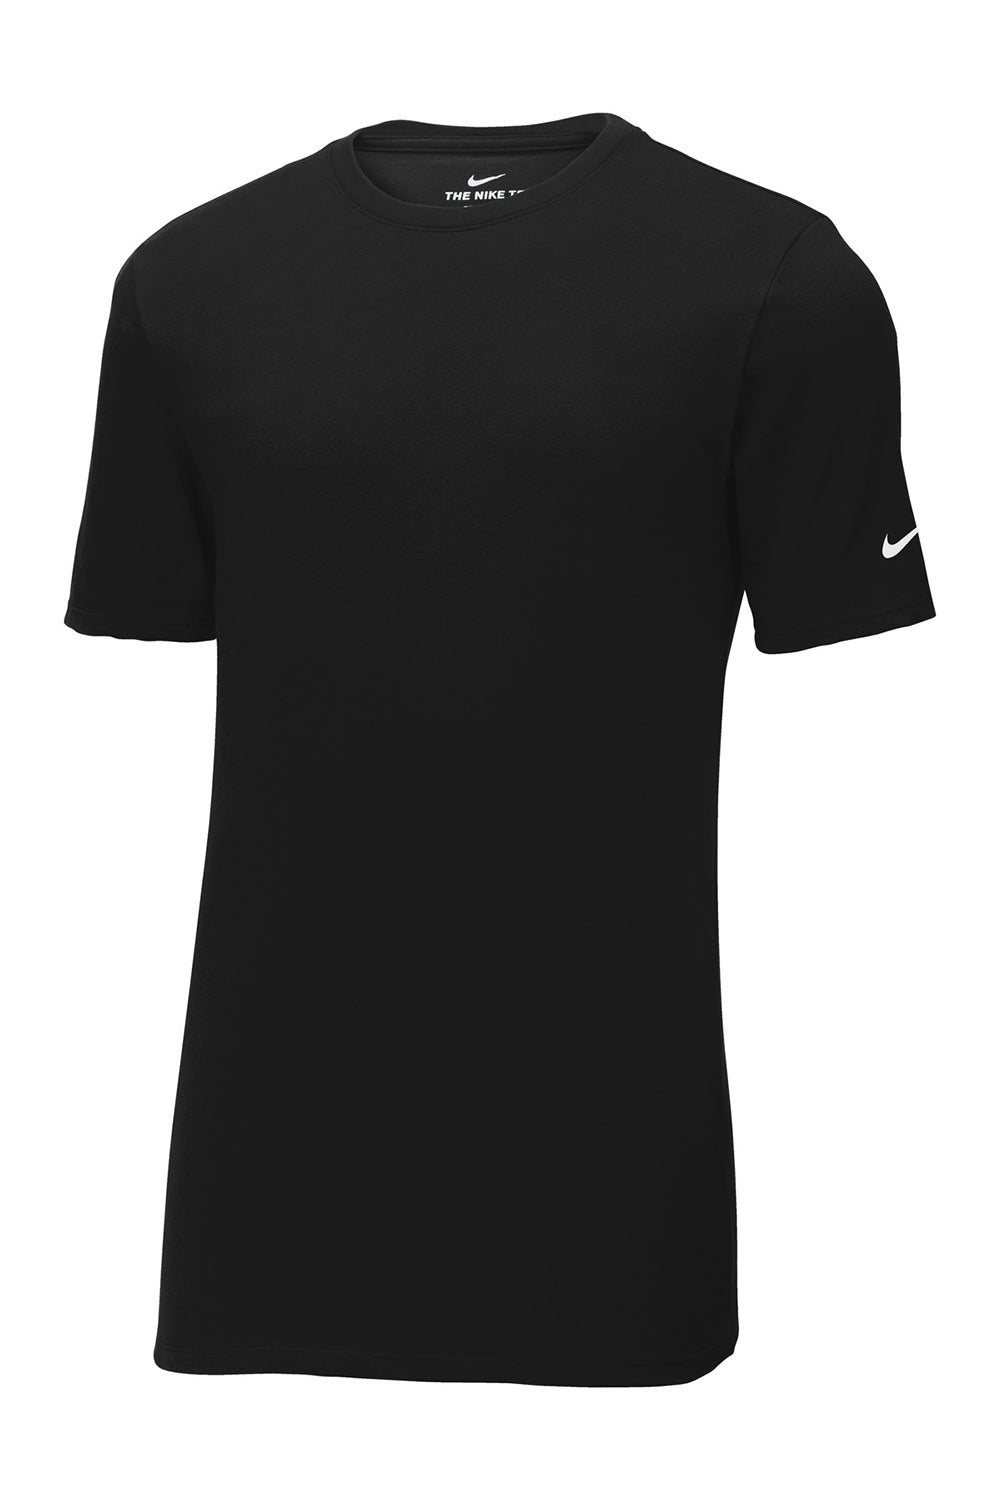 Nike NKBQ5231 Mens Dri-Fit Moisture Wicking Short Sleeve Crewneck T-Shirt Black Flat Front